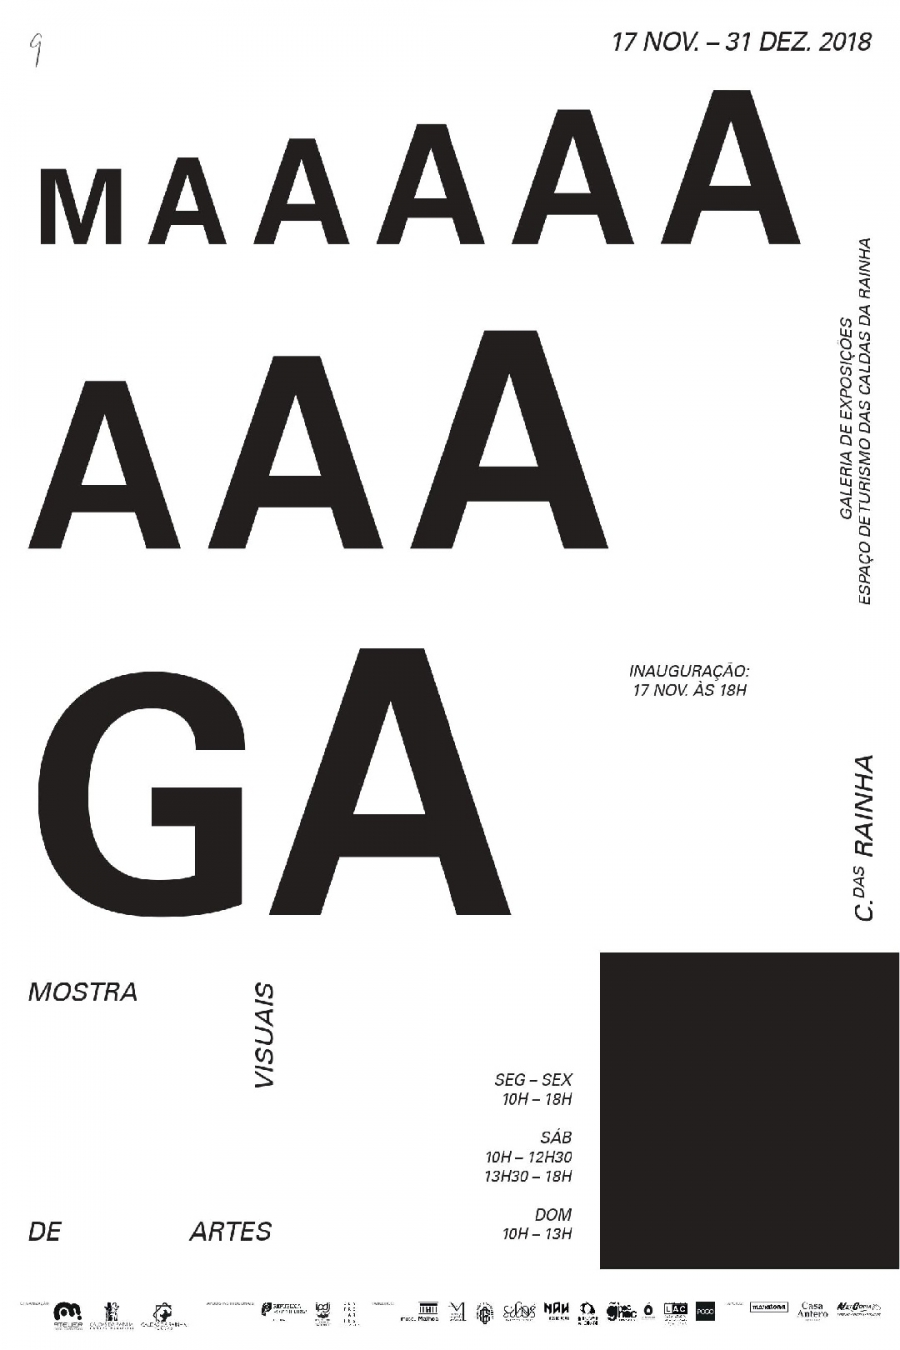 MAGA – Mostra de Artes Visuais